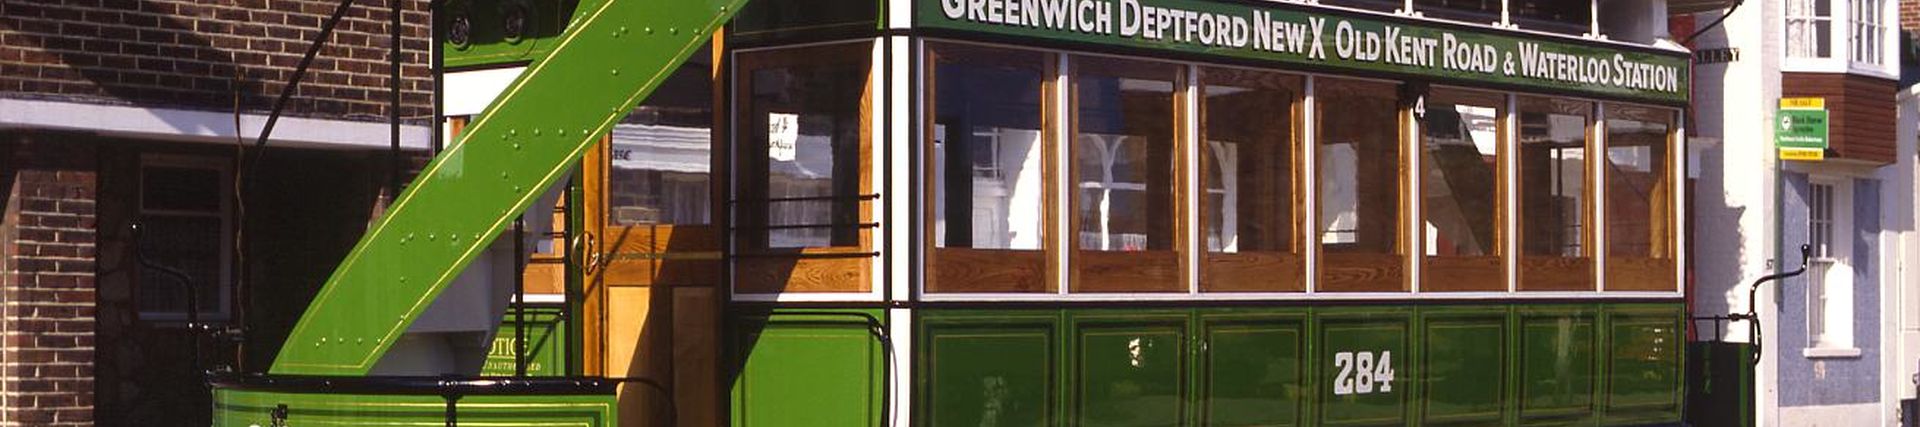 London Tramways Company double deck horse tram No 284, built by John Stephenson & Co New York, 1882